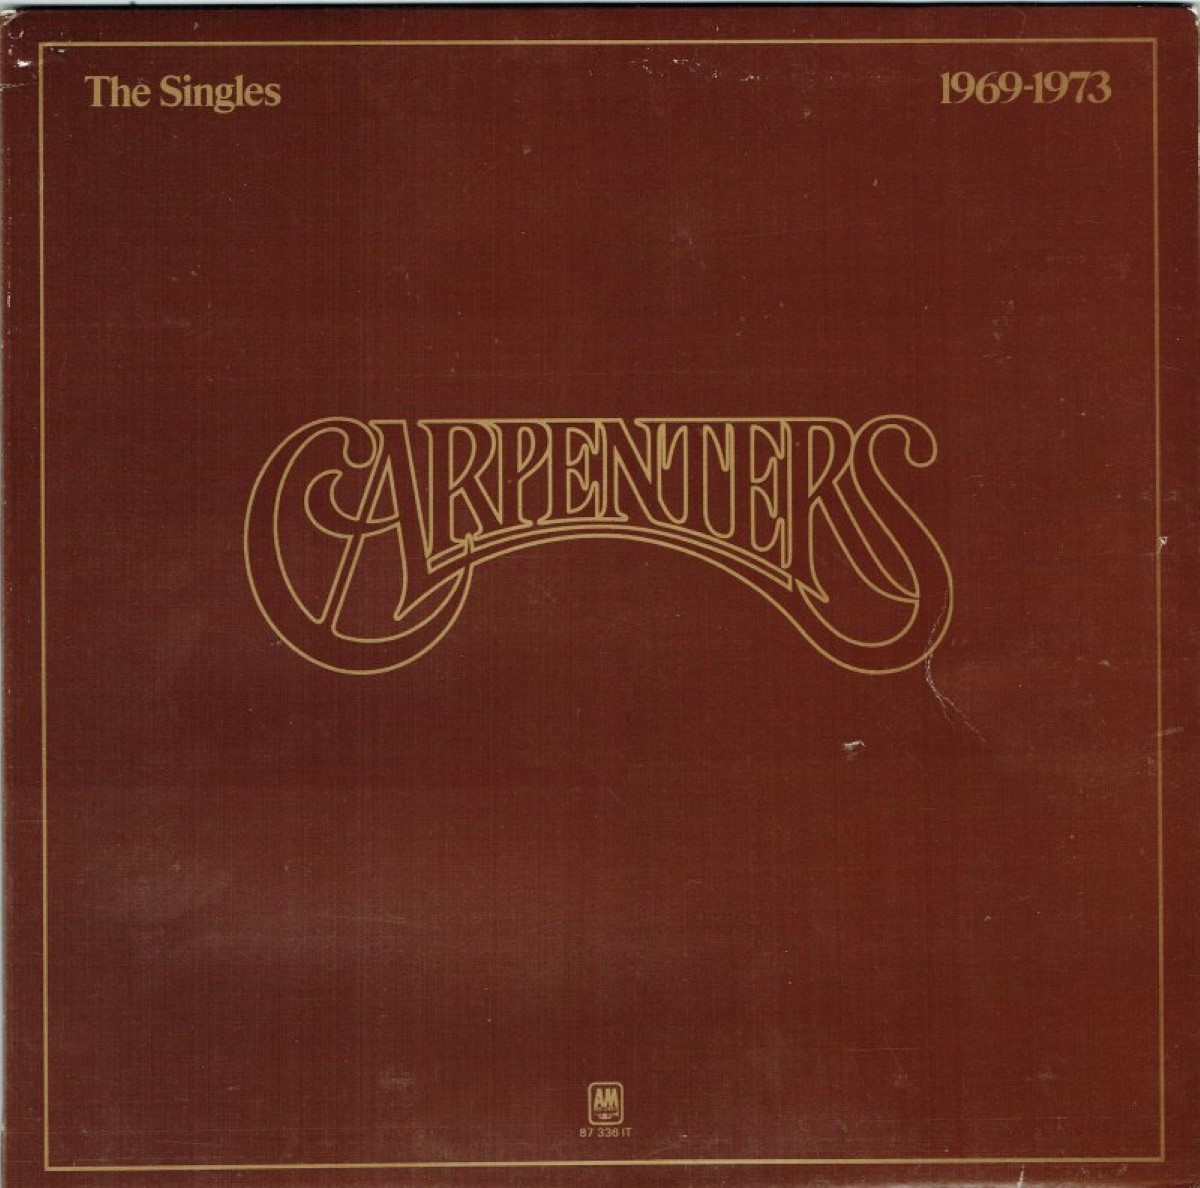 Carpenters - The Singles 1969-1973 (1973)